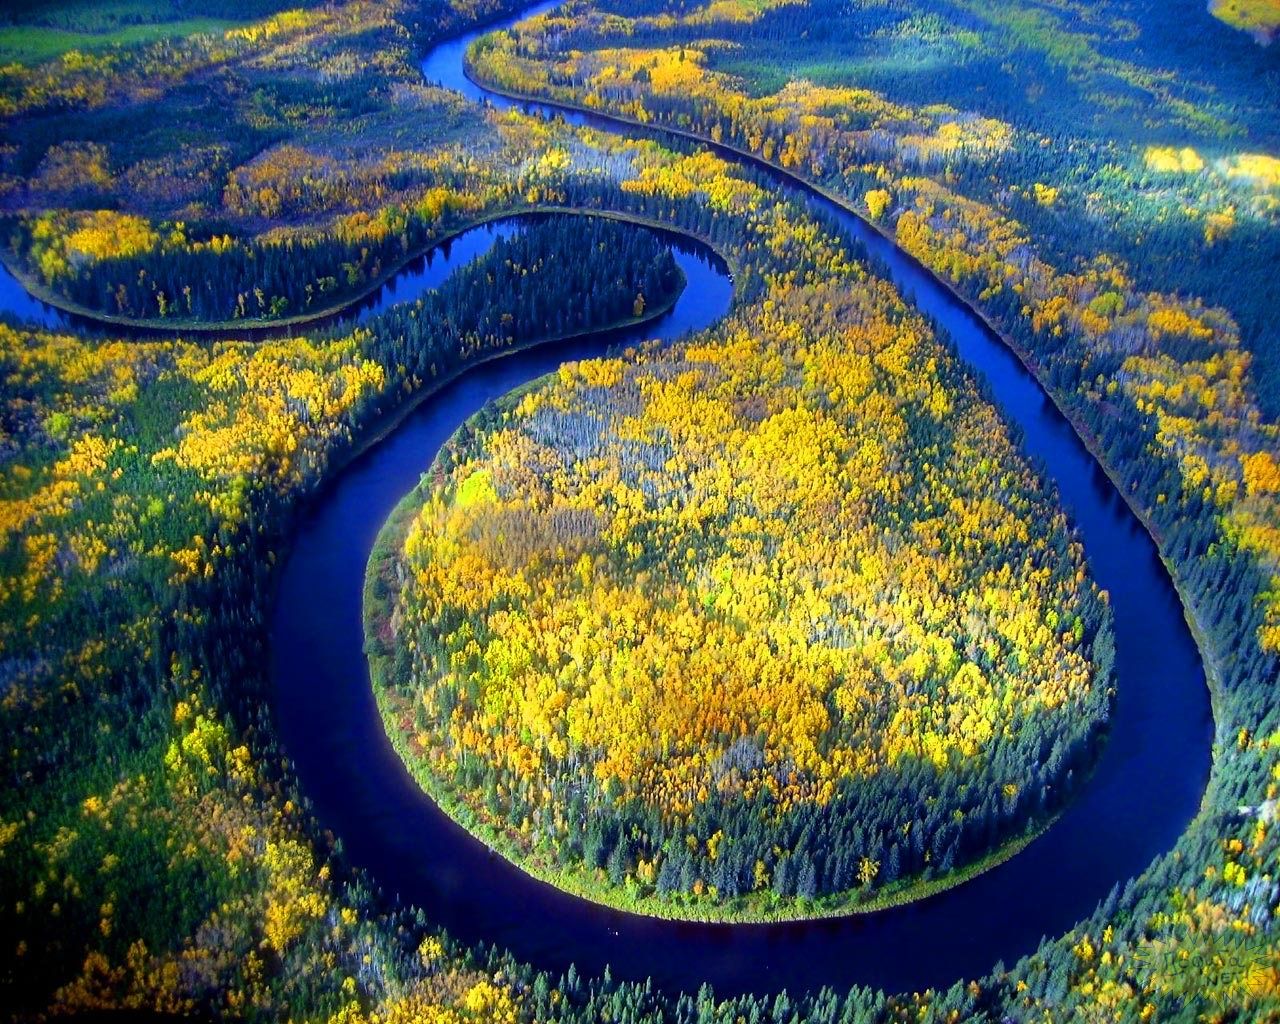 The Irtysh River